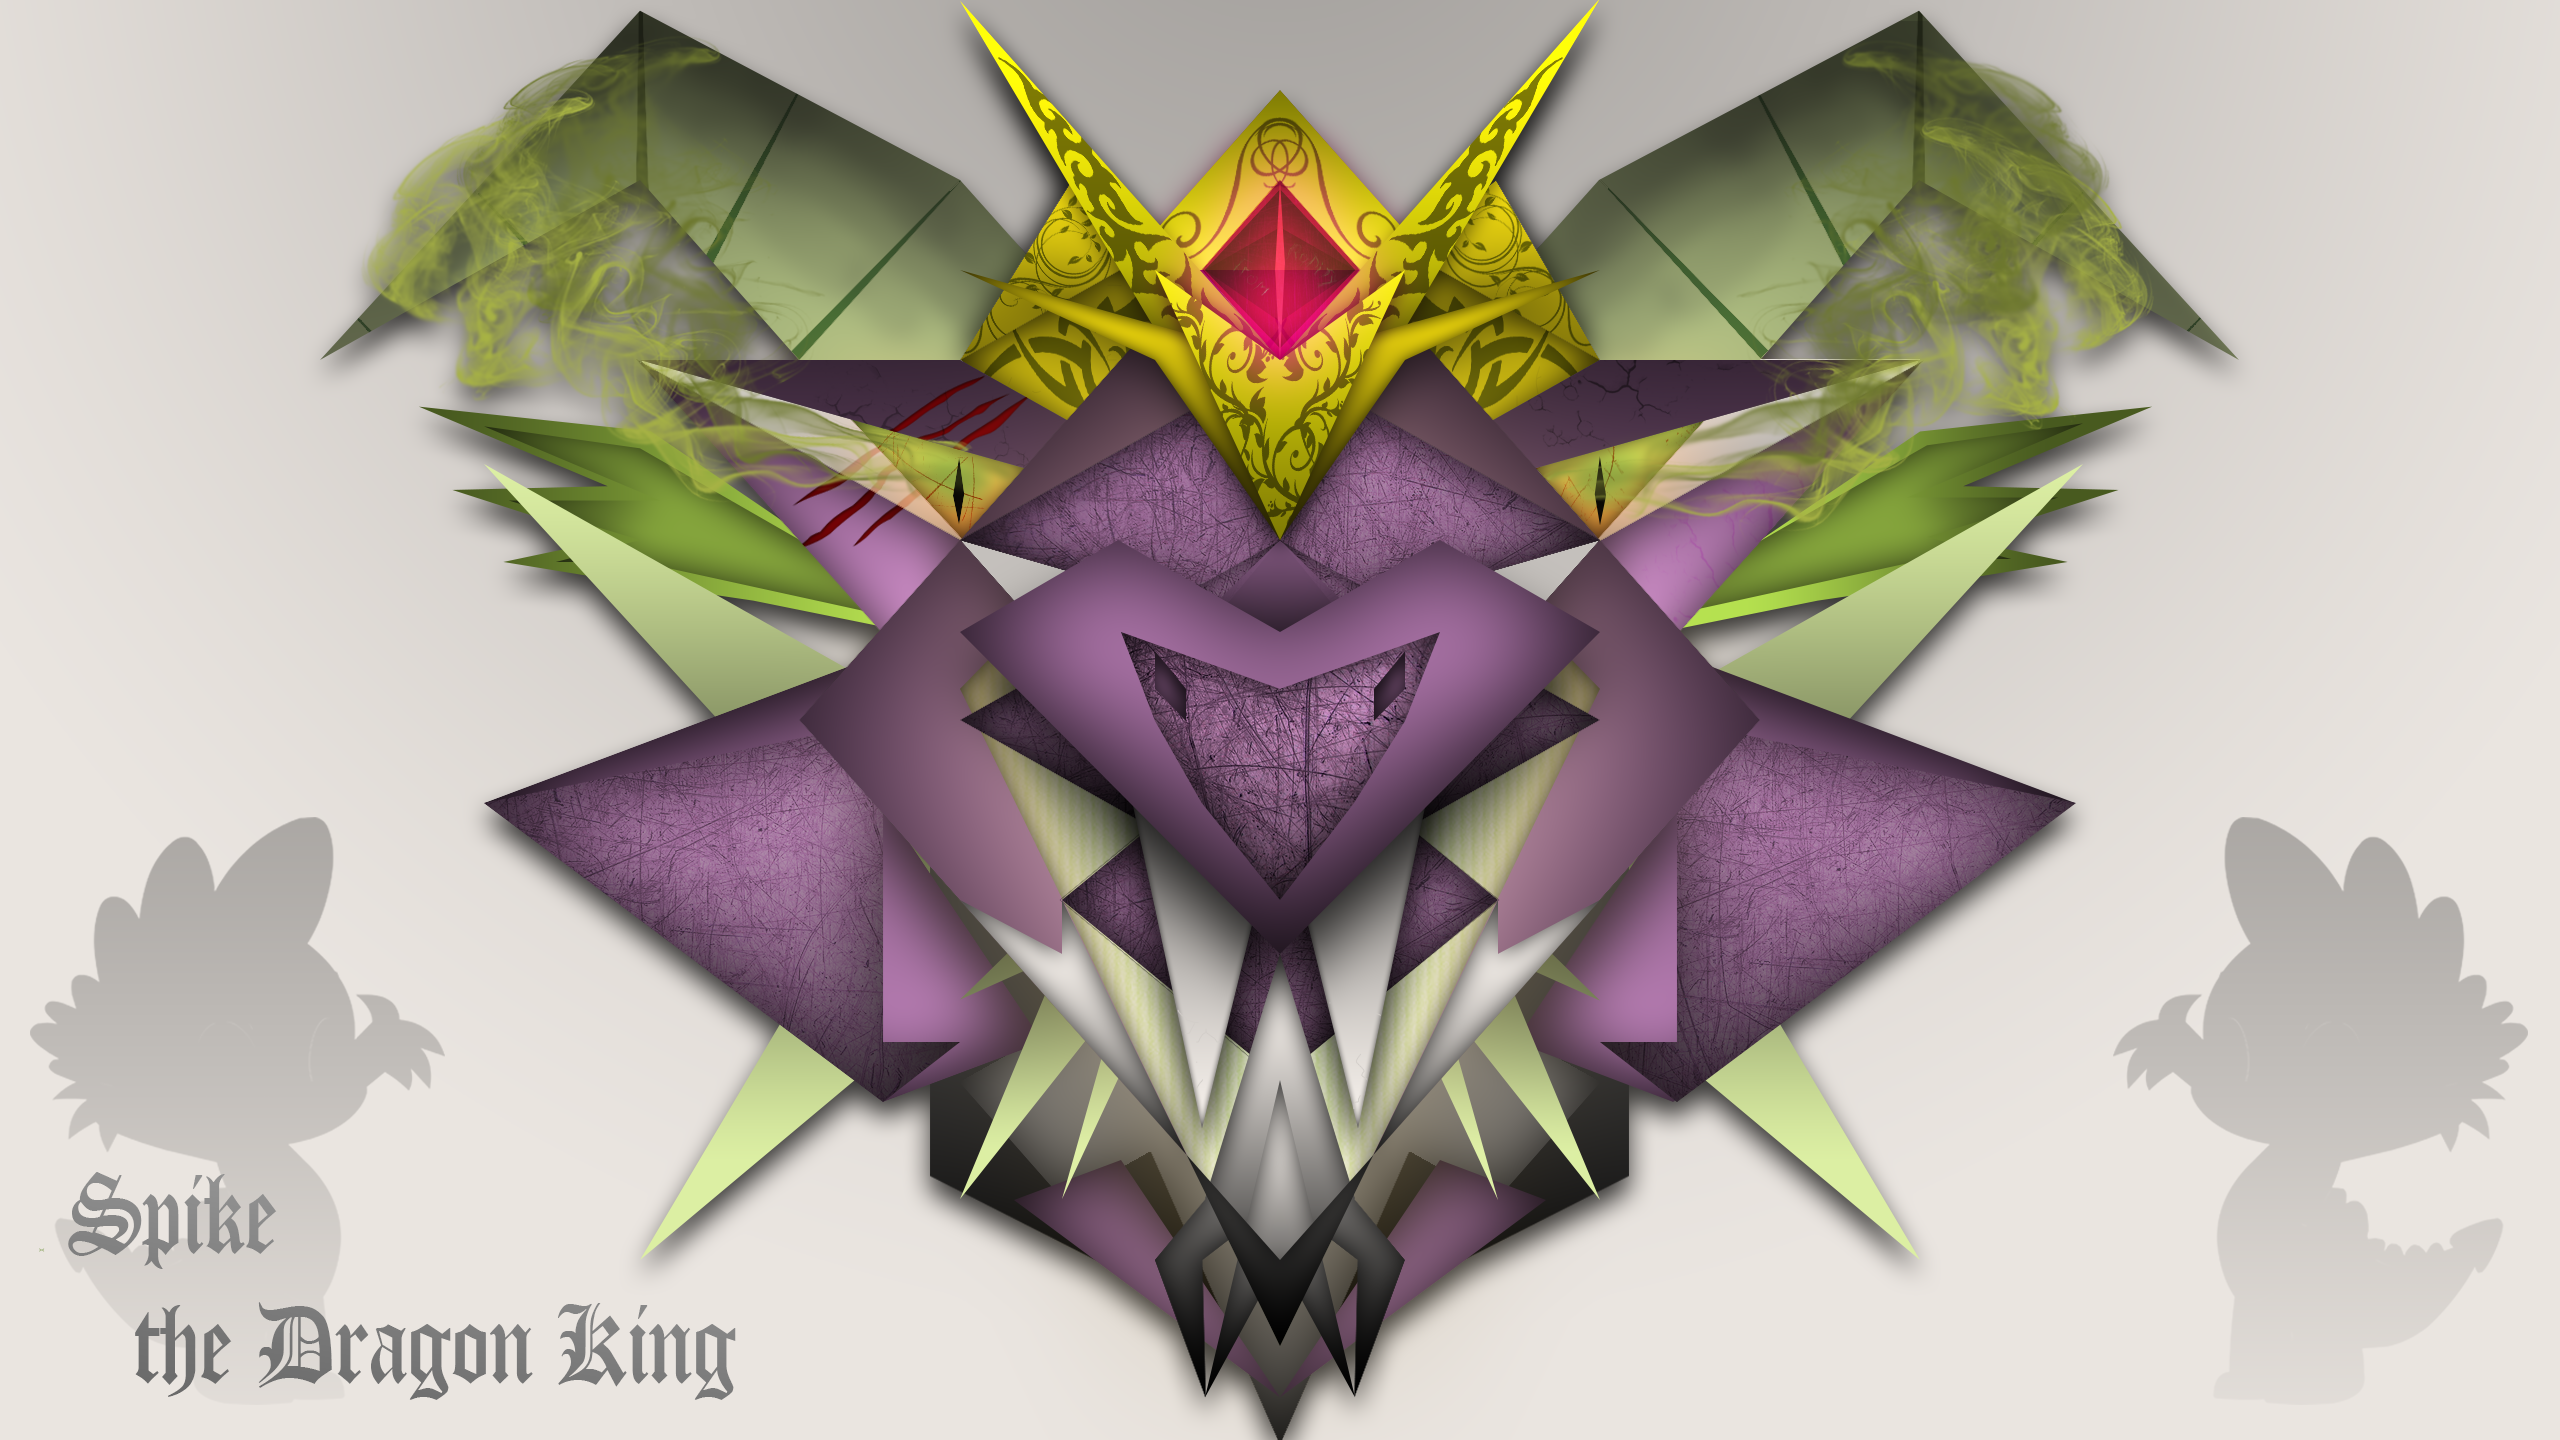 Spike the Dragon King wallpaper by skrayp on DeviantArt